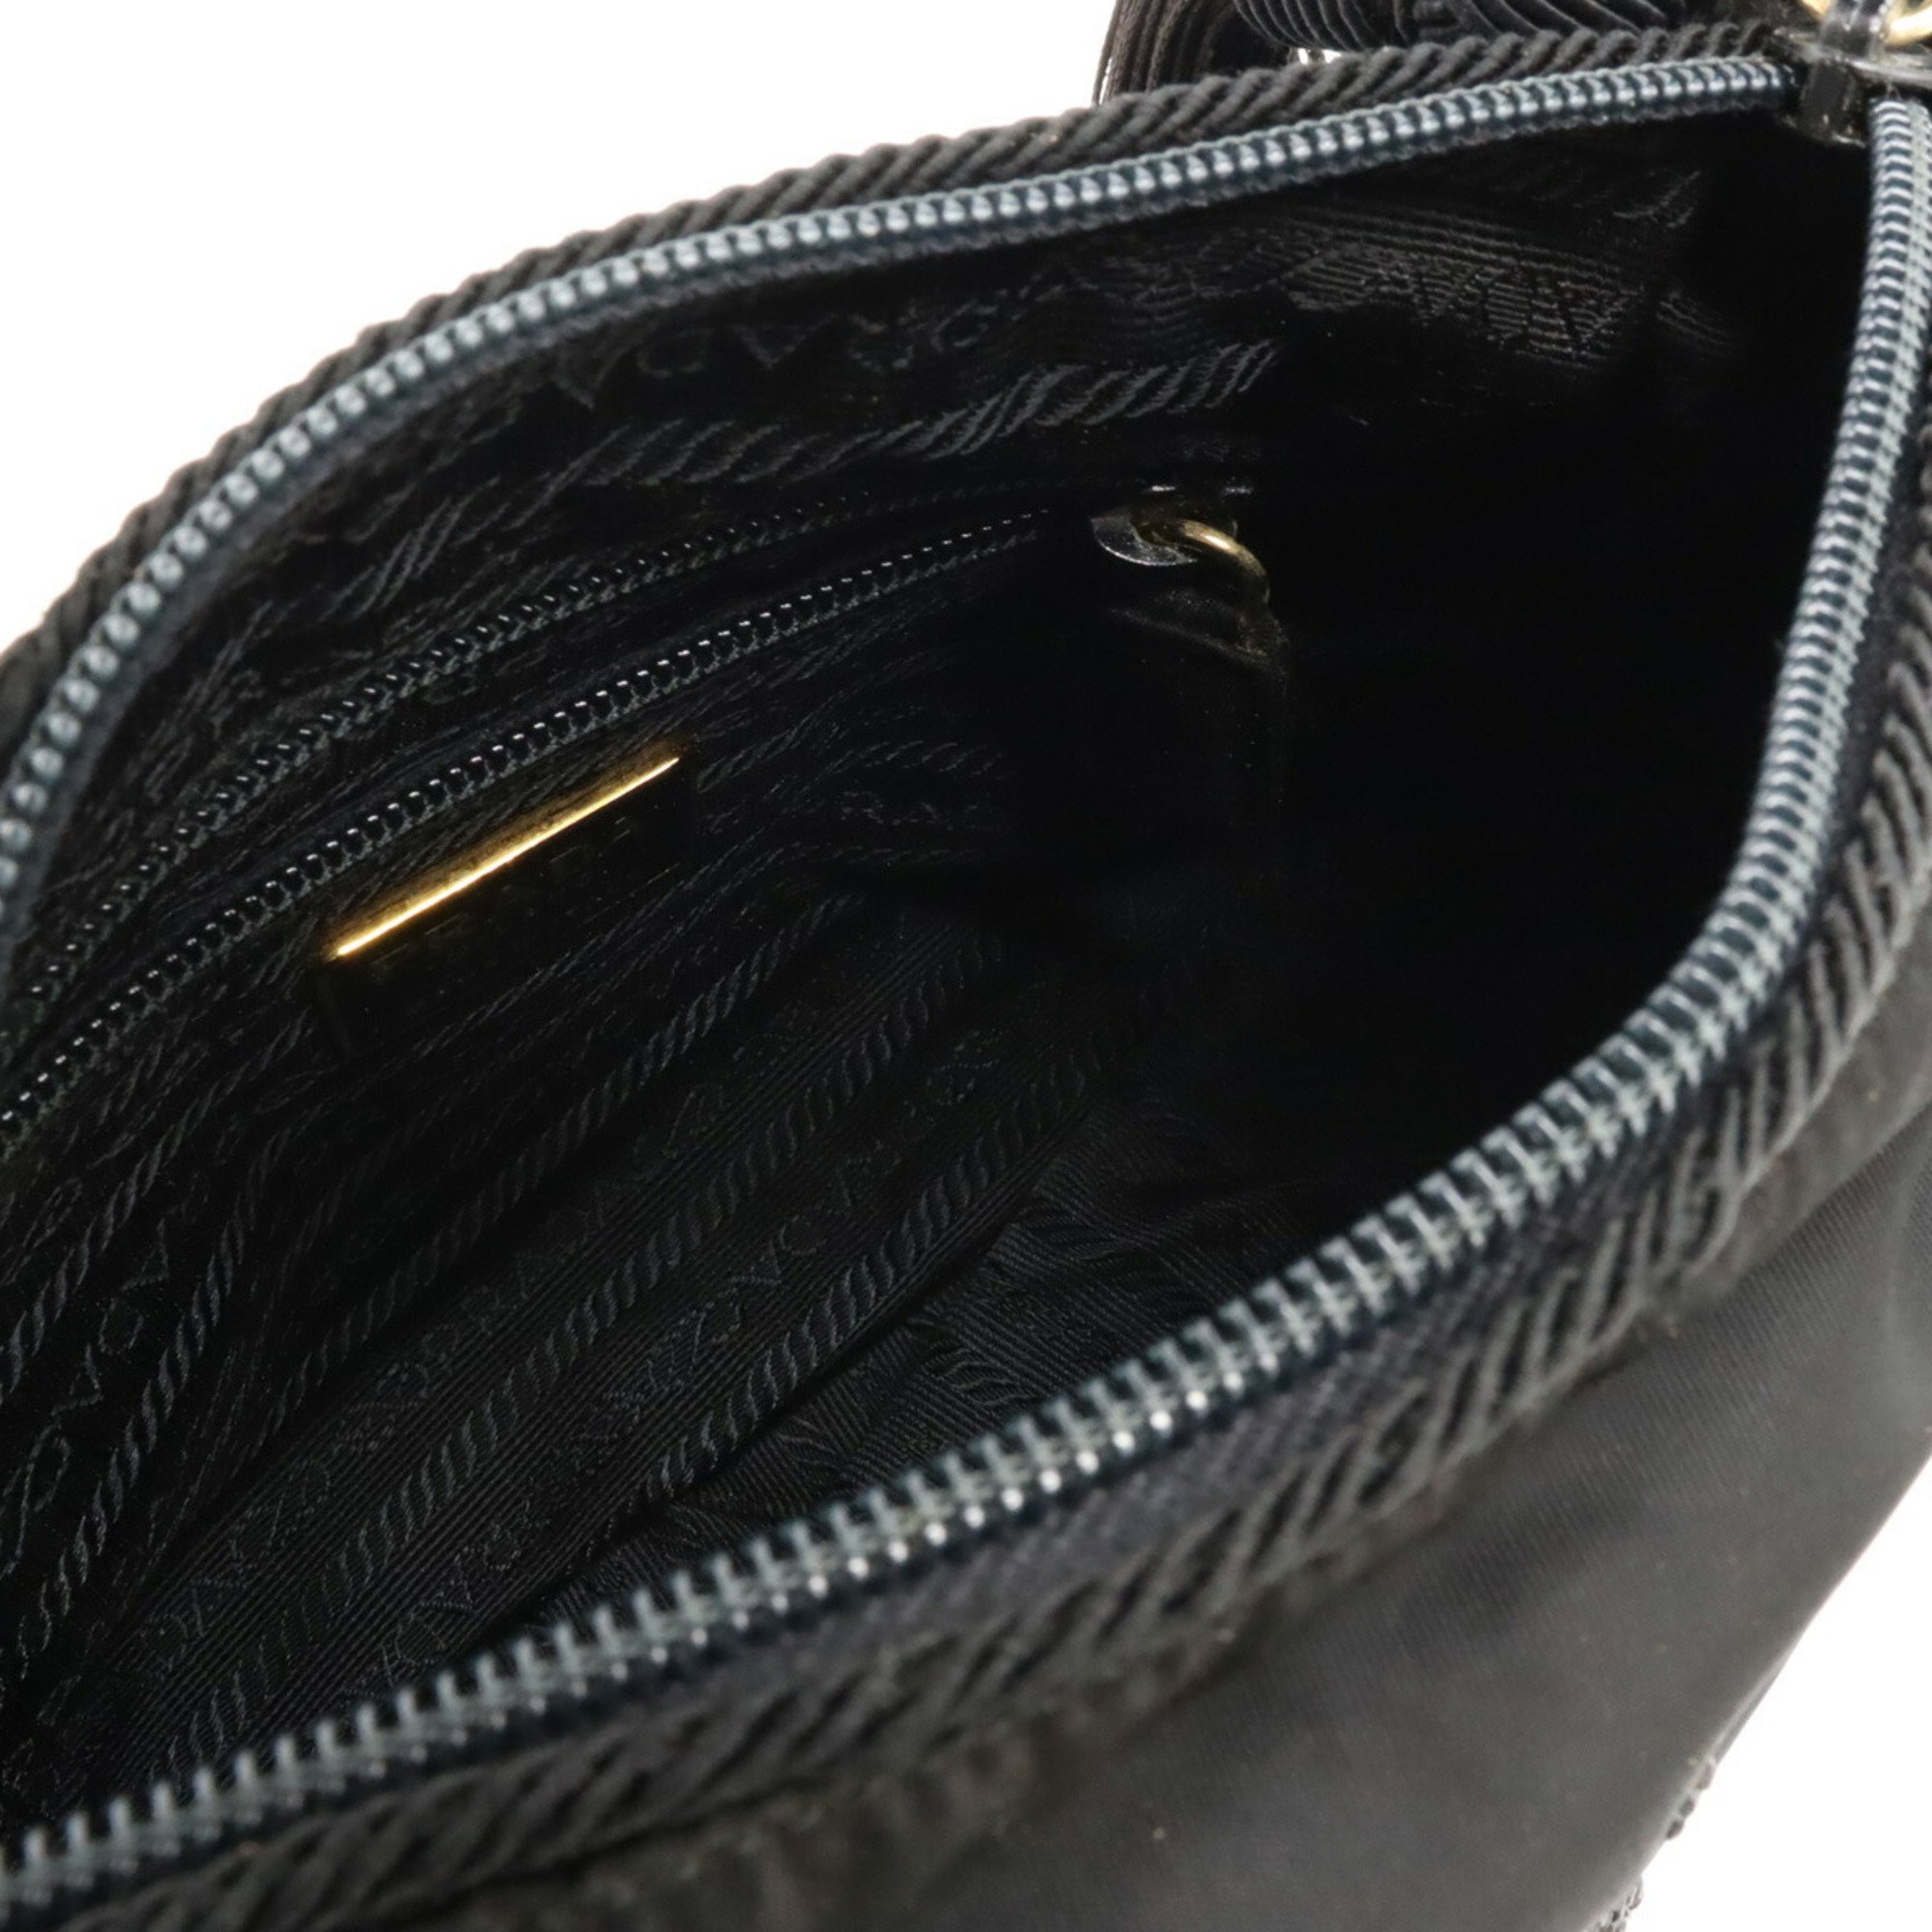 PRADA Prada handbag rope handle tassel beads nylon NERO black